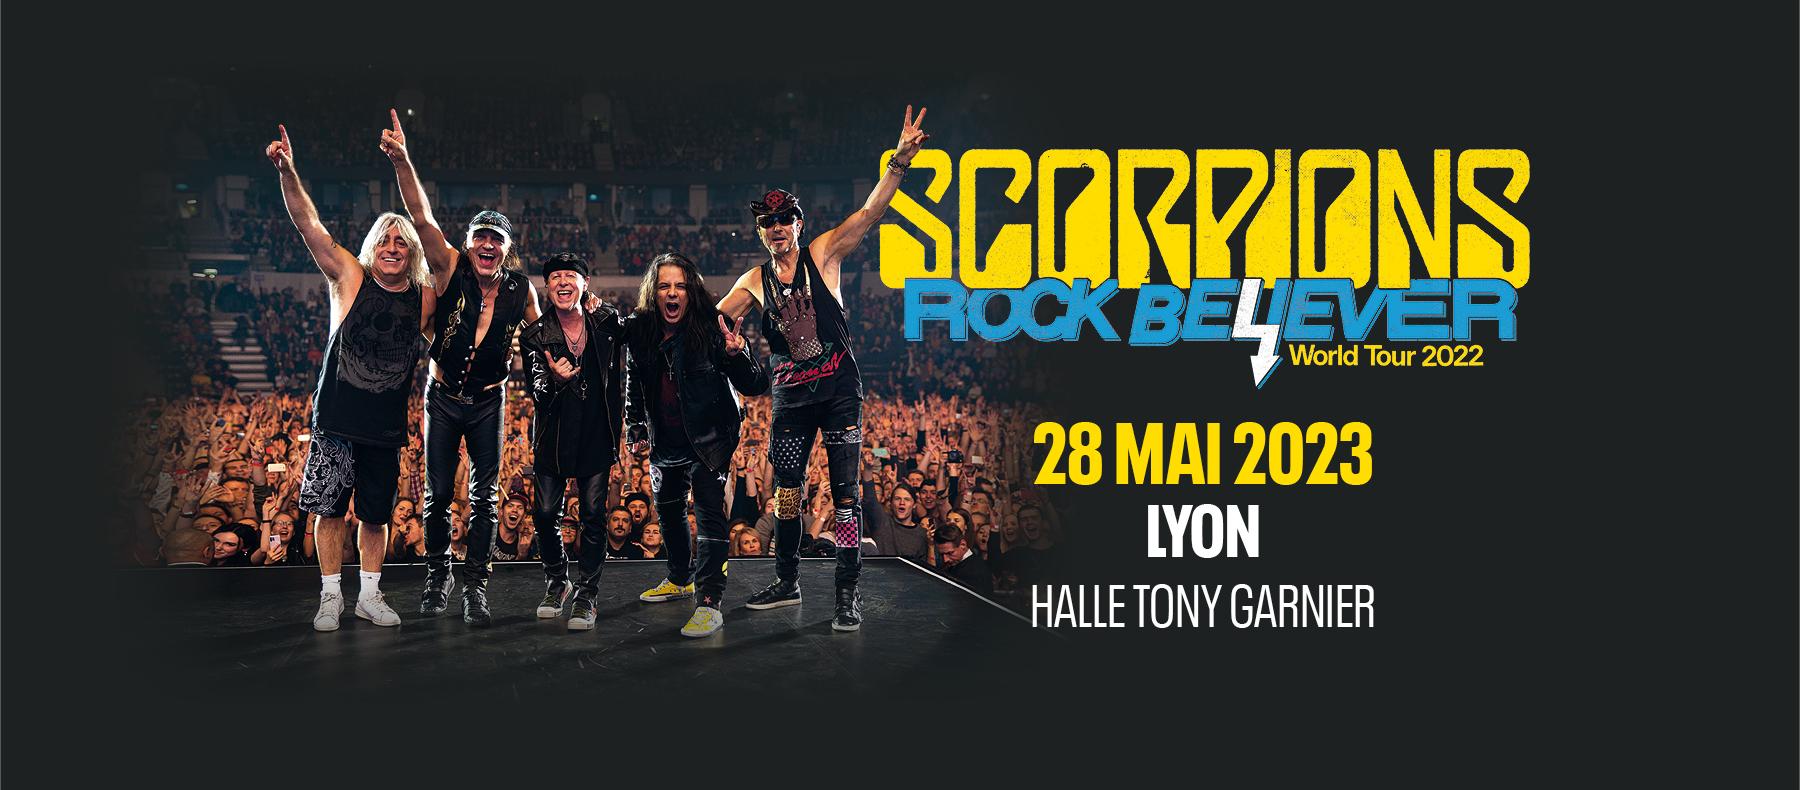 Scorpions lyon 2023